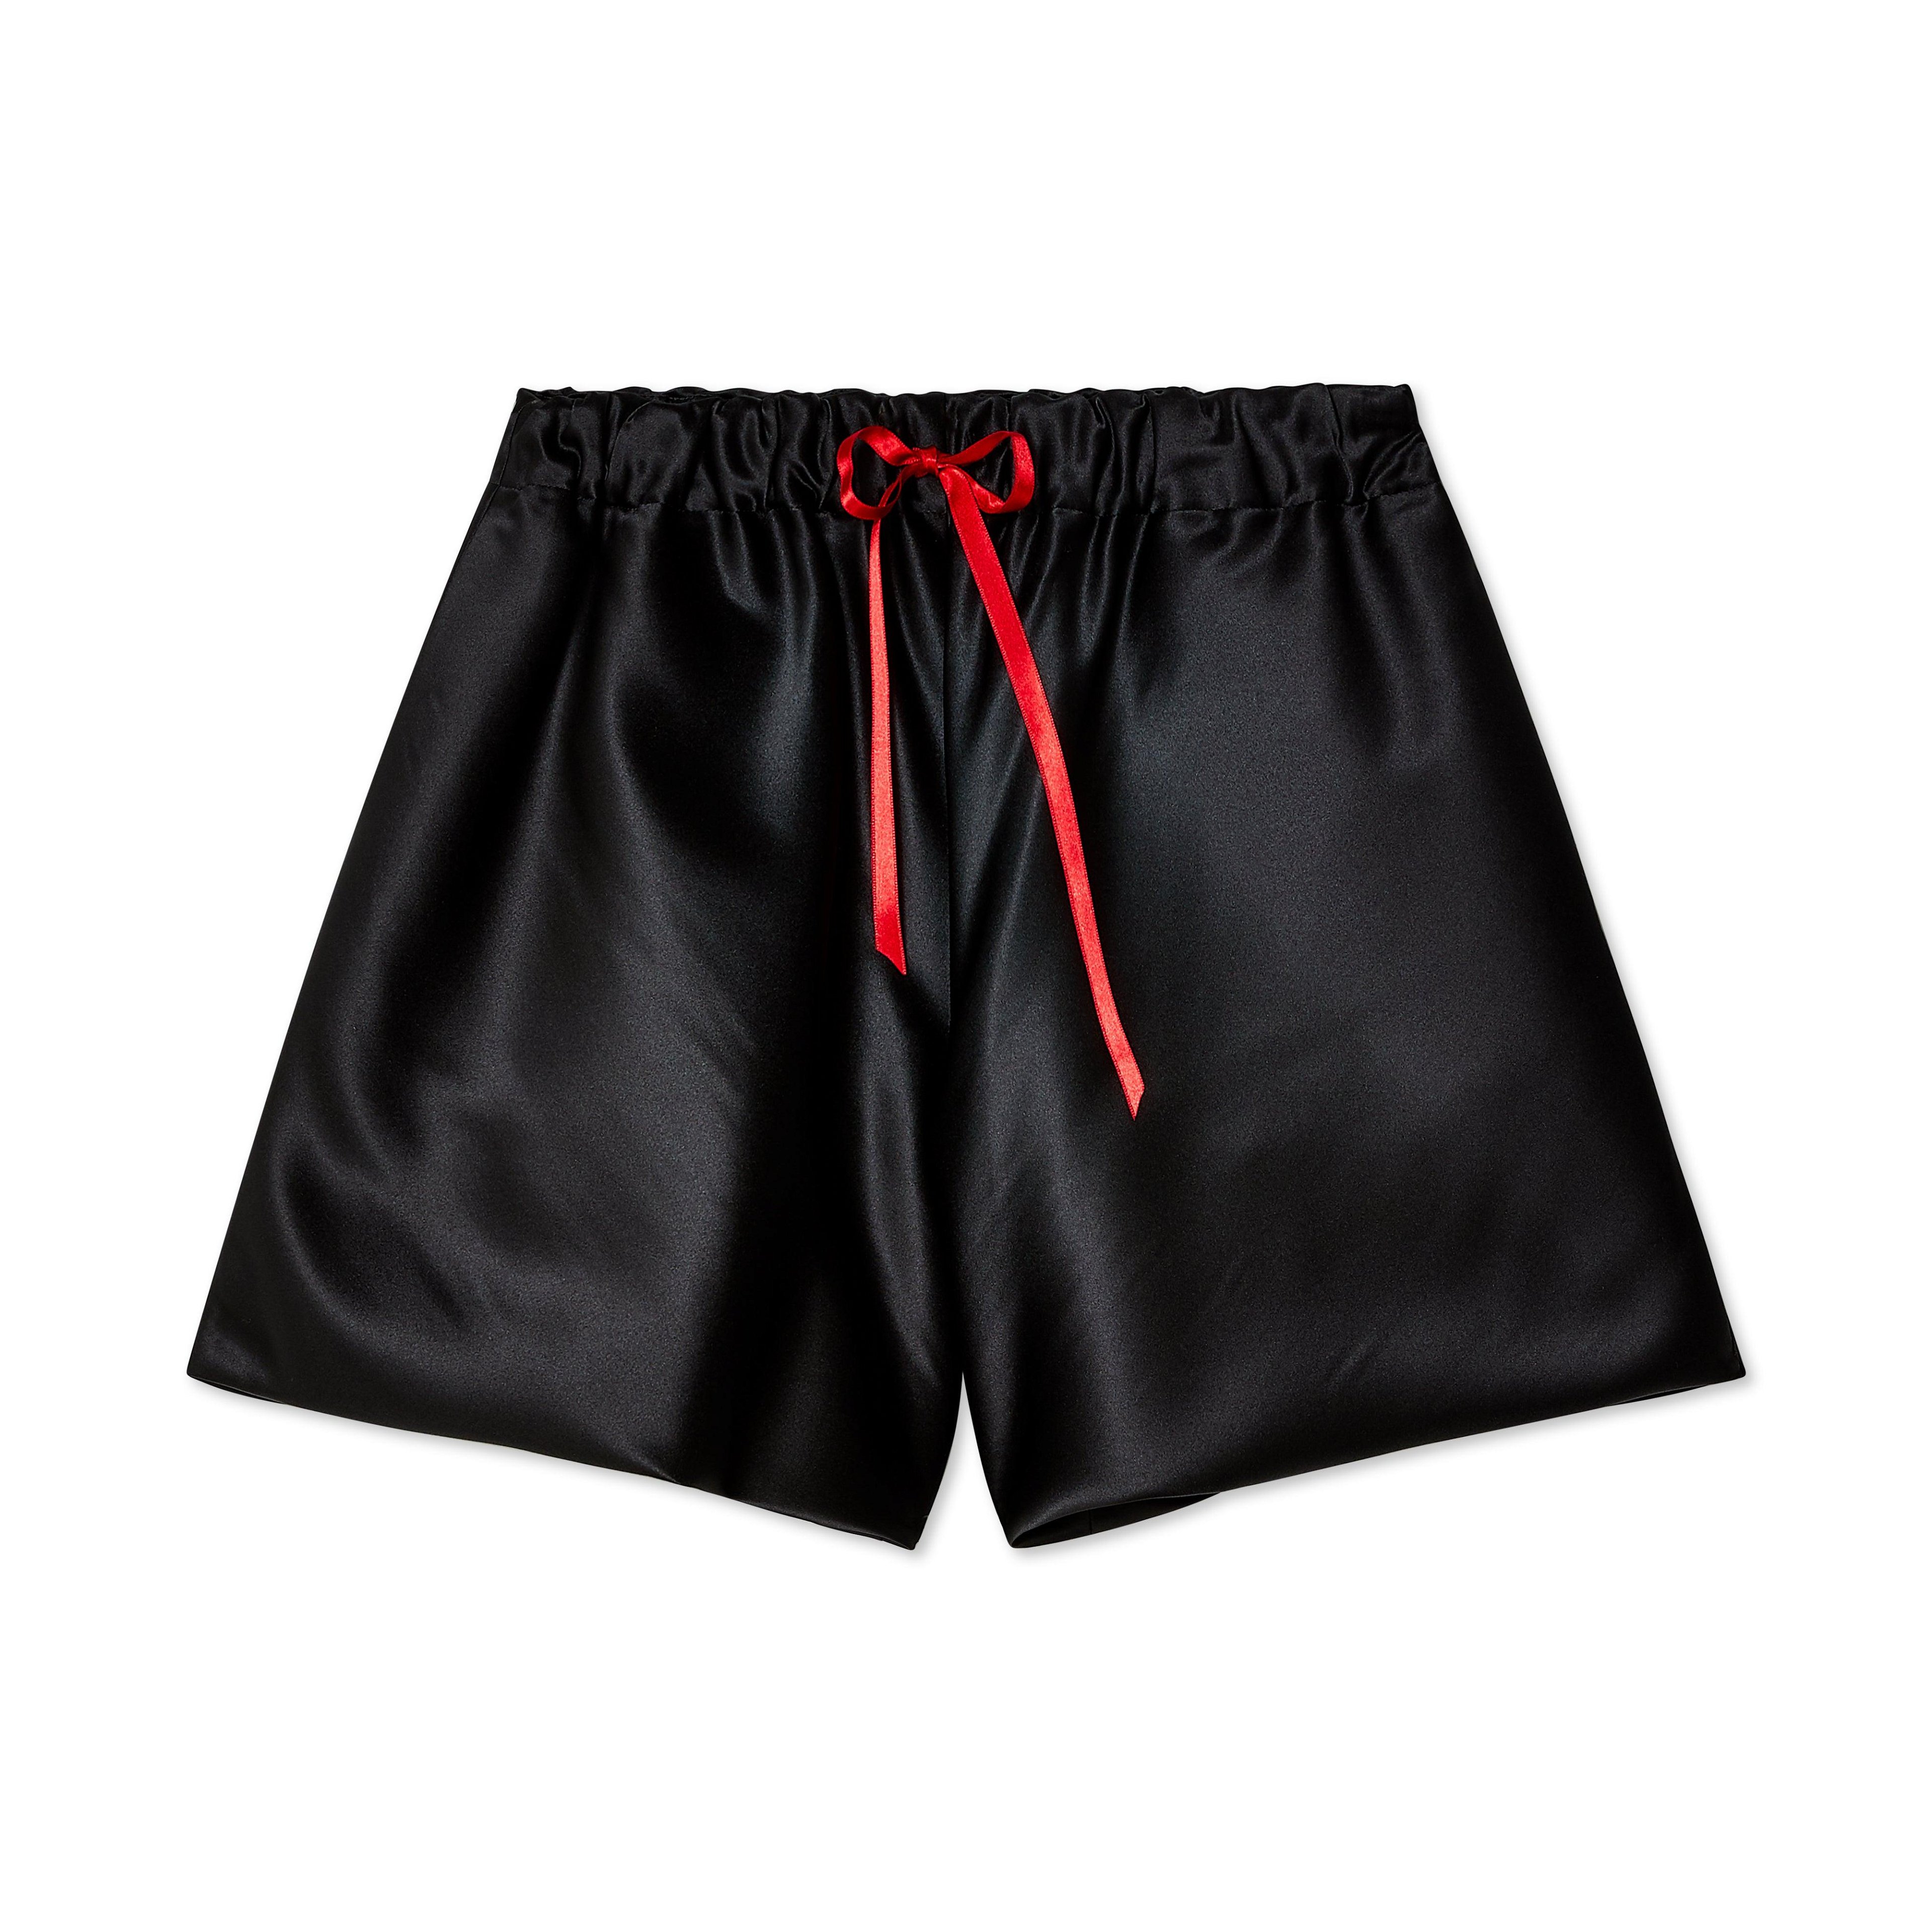 Simone Rocha - Women's Boxer Shorts - (Black/Red) by SIMONE ROCHA